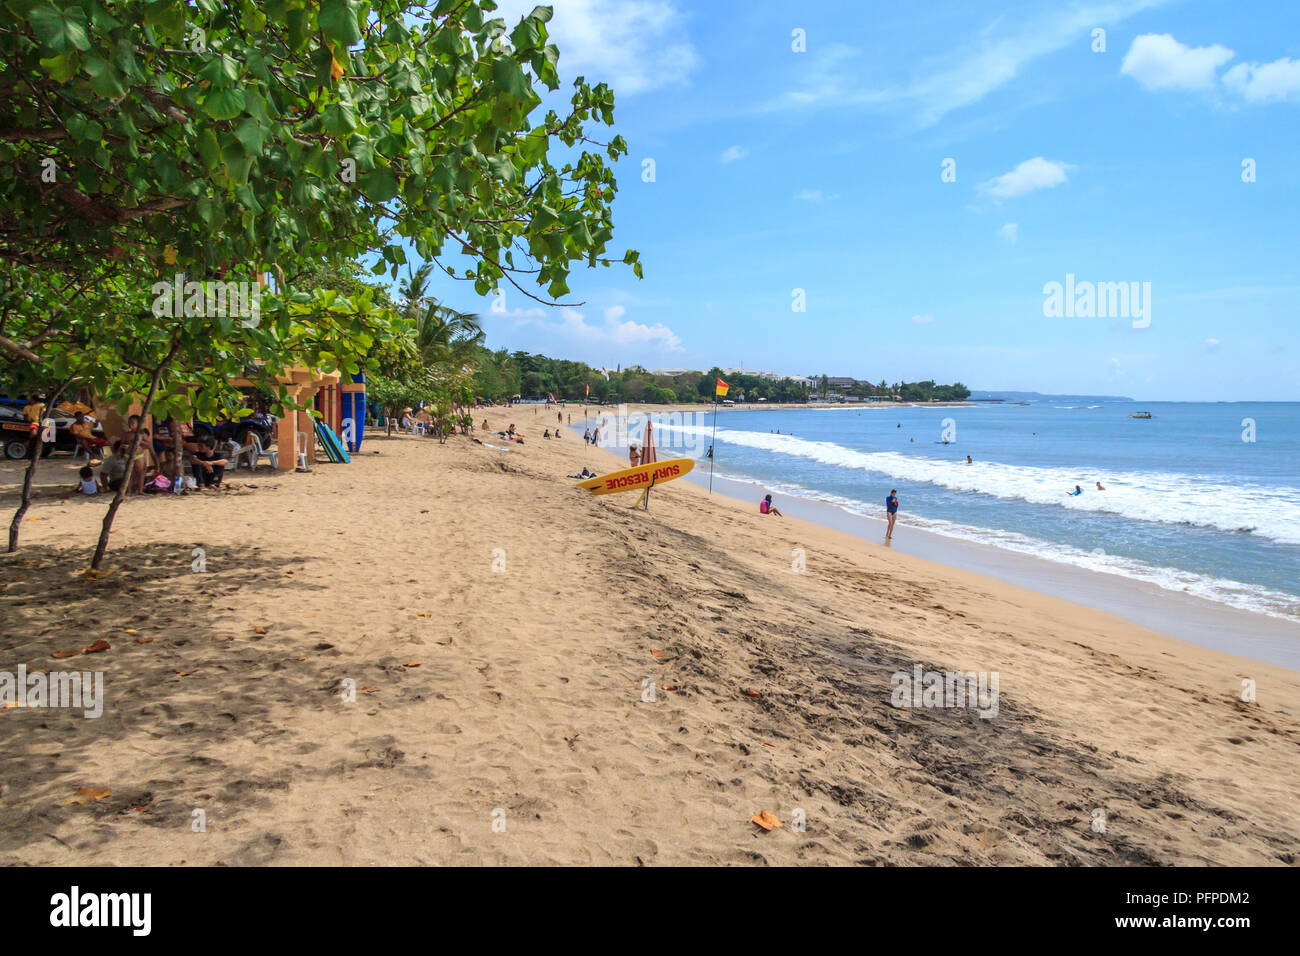 Kuta, Bali - 18th November 2016: The main beach in Kuta. It si very popular with surfers. Stock Photo